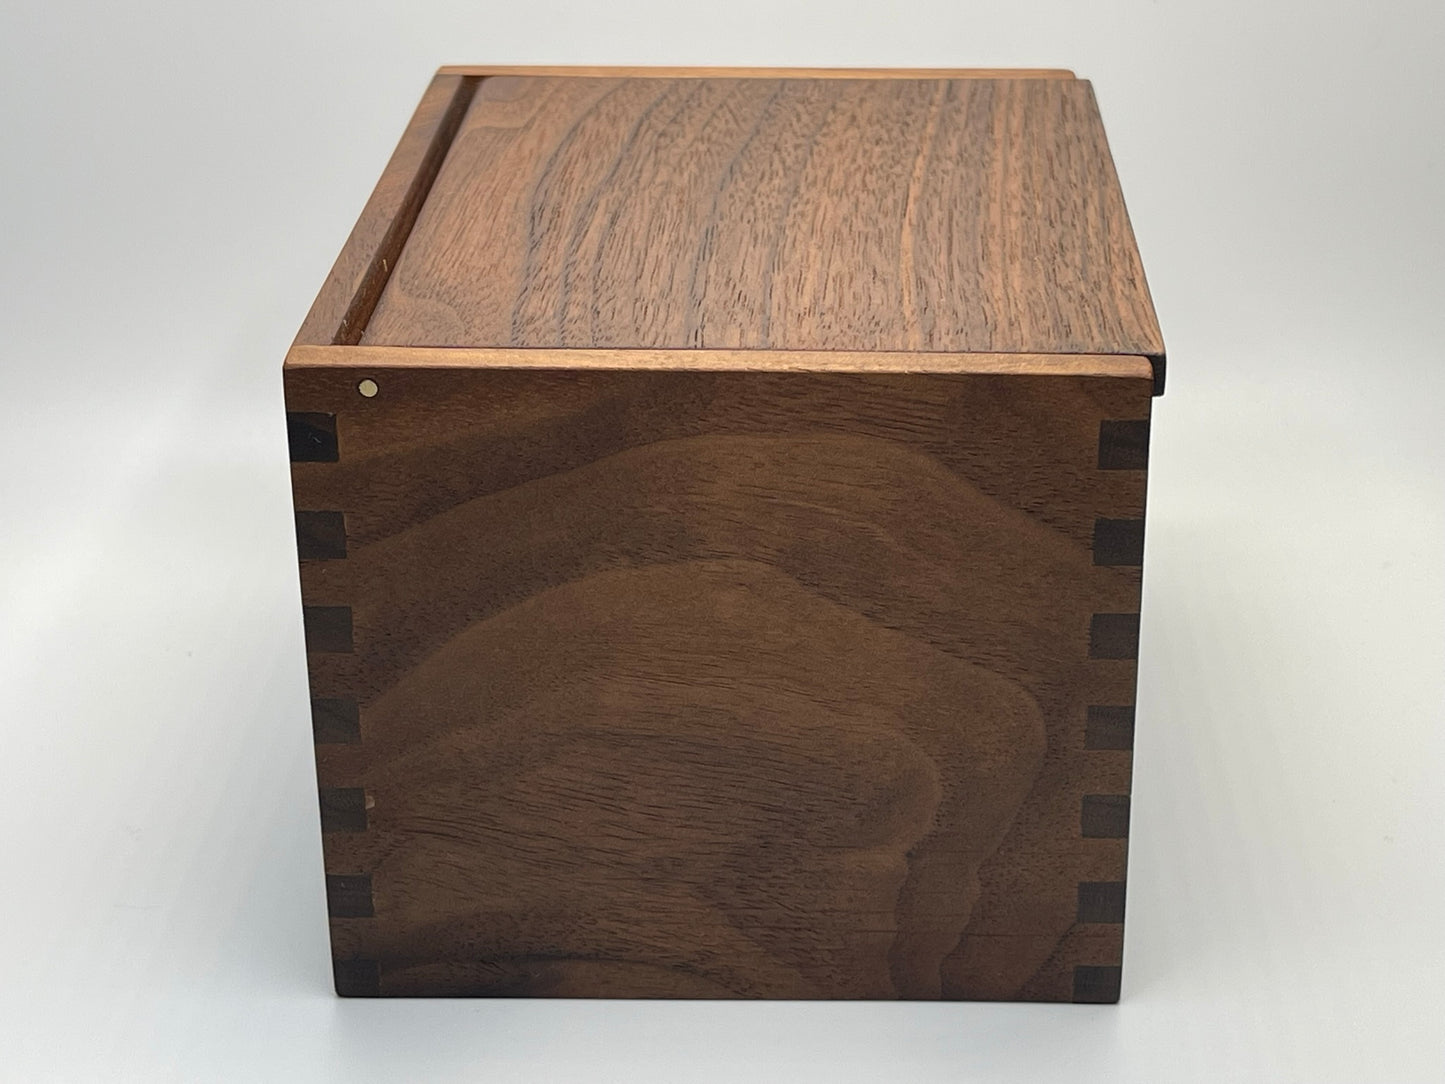 Wood Salt Cellar XL - Salt Box - Salt Pig -  Keepsake Box - Walnut Hardwood